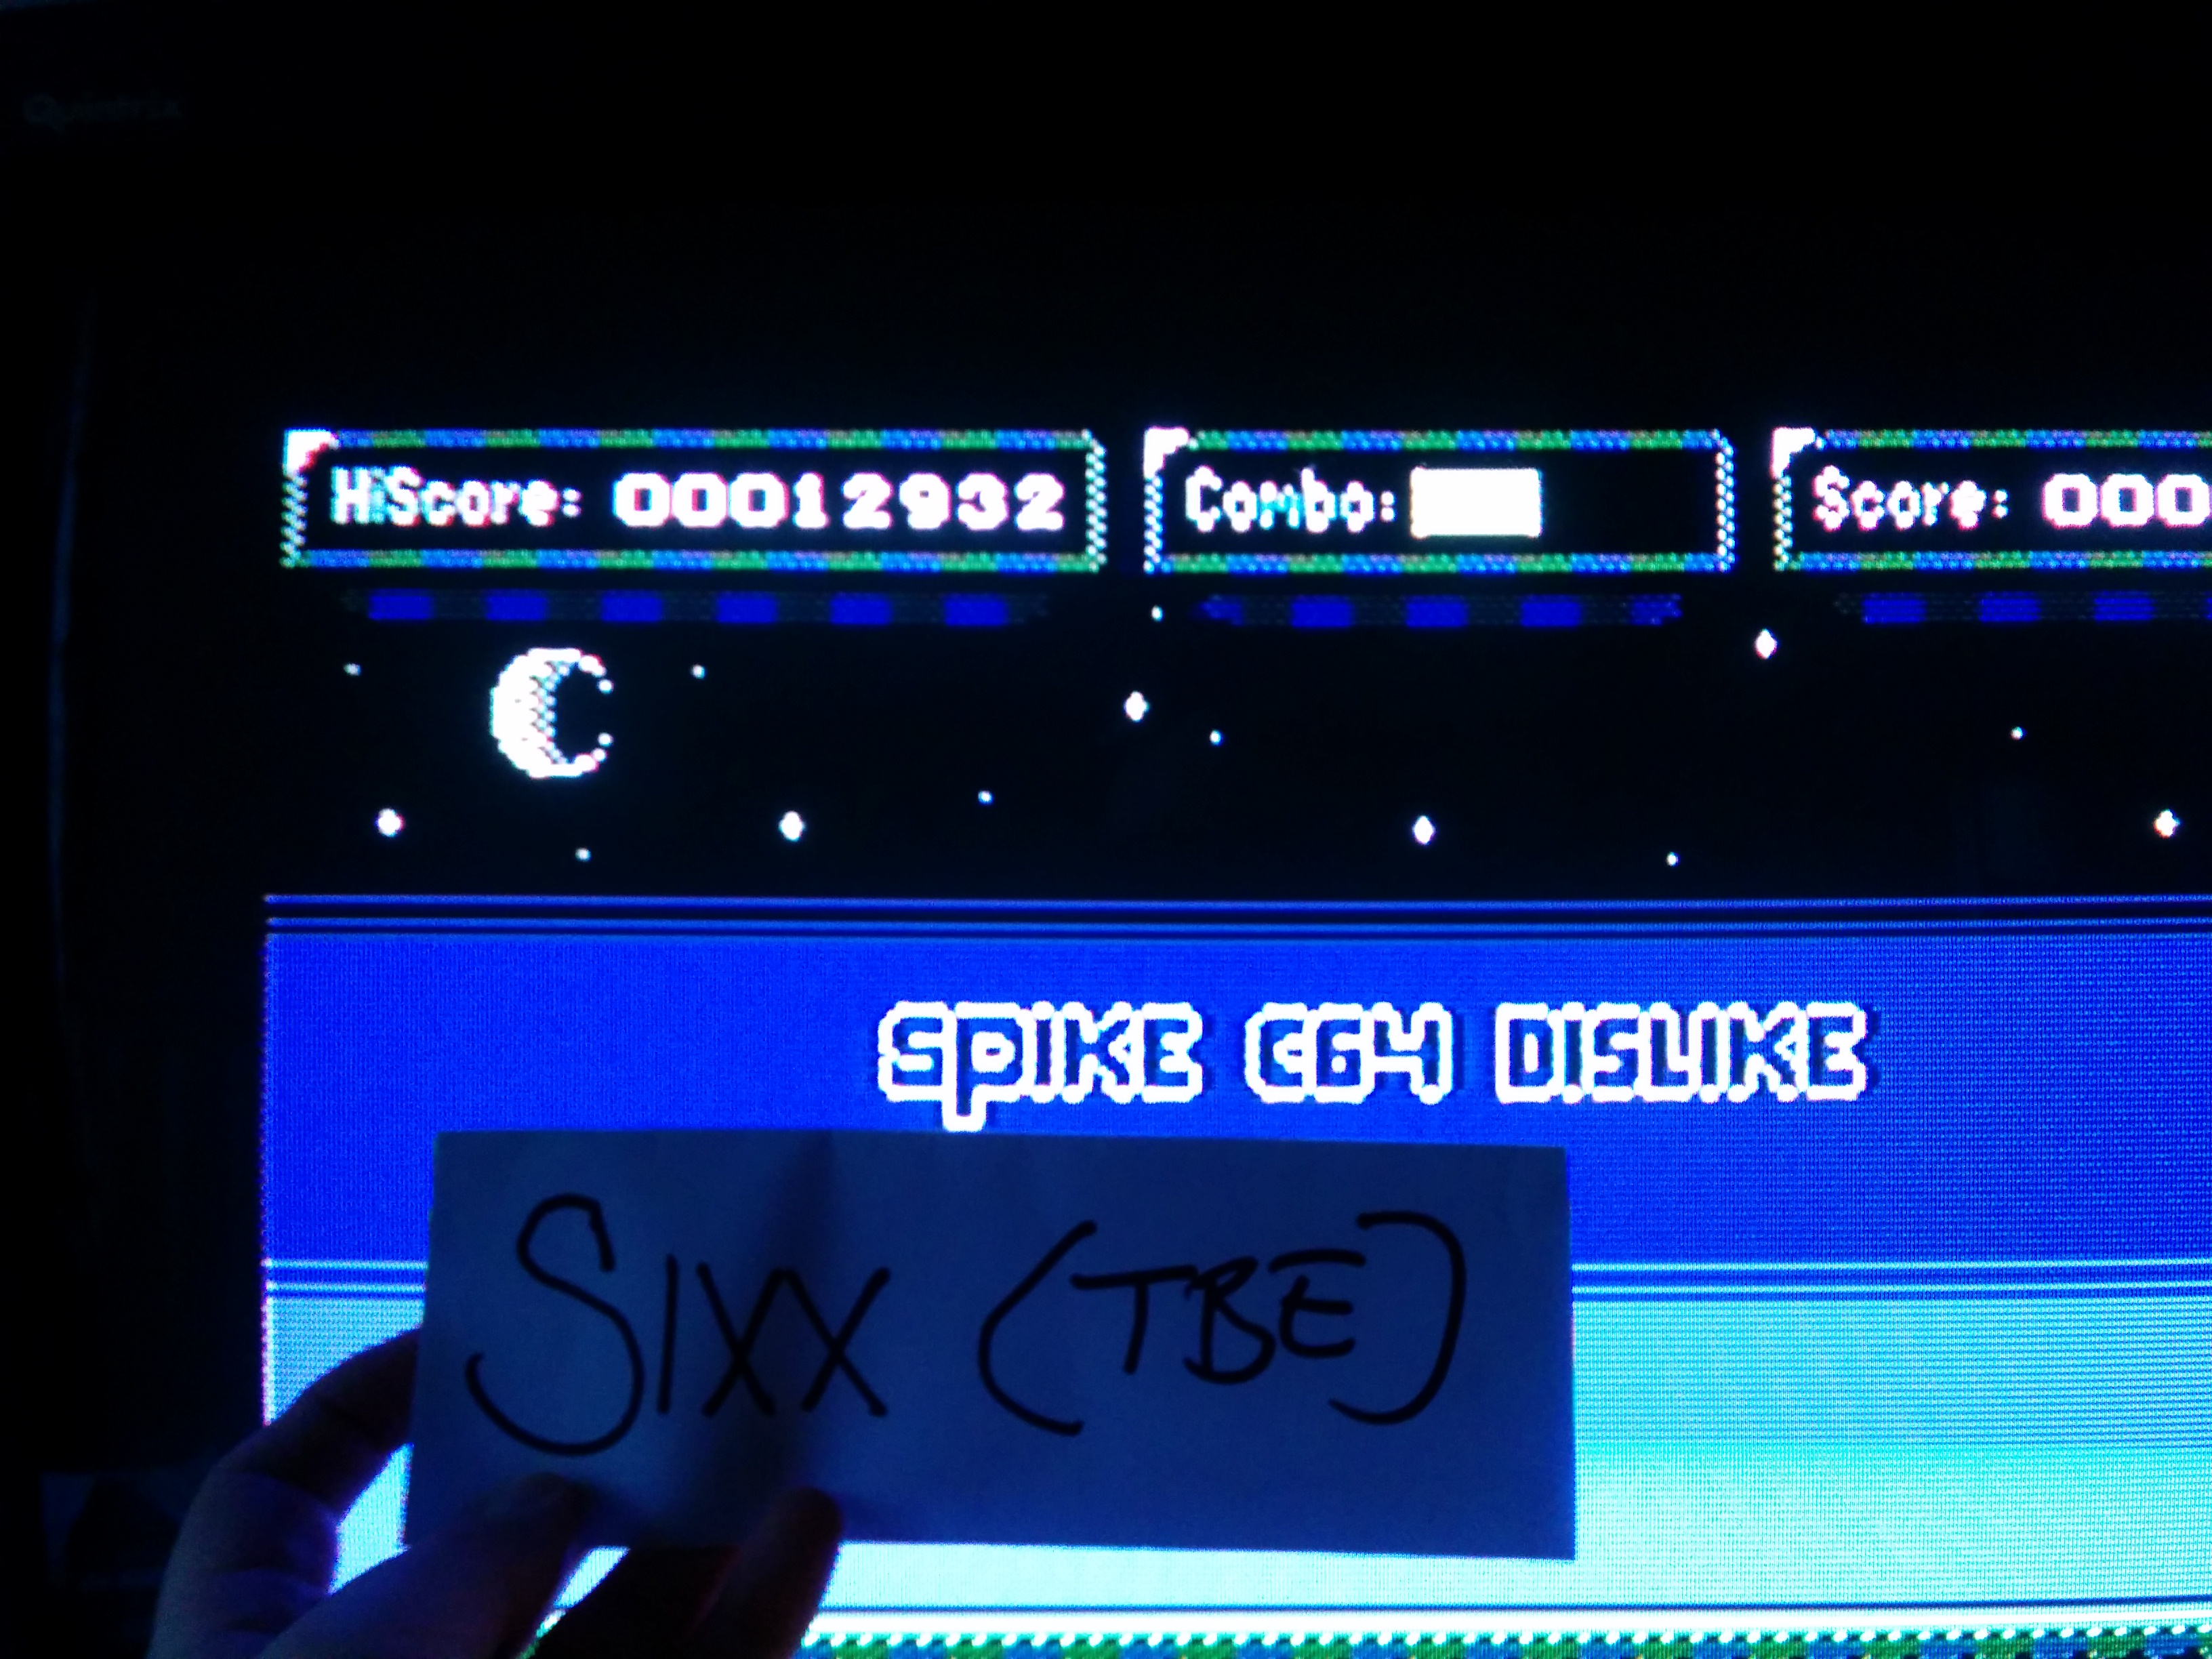 Sixx: Spike C64 Dislike (Commodore 64) 12,932 points on 2014-04-06 15:35:27